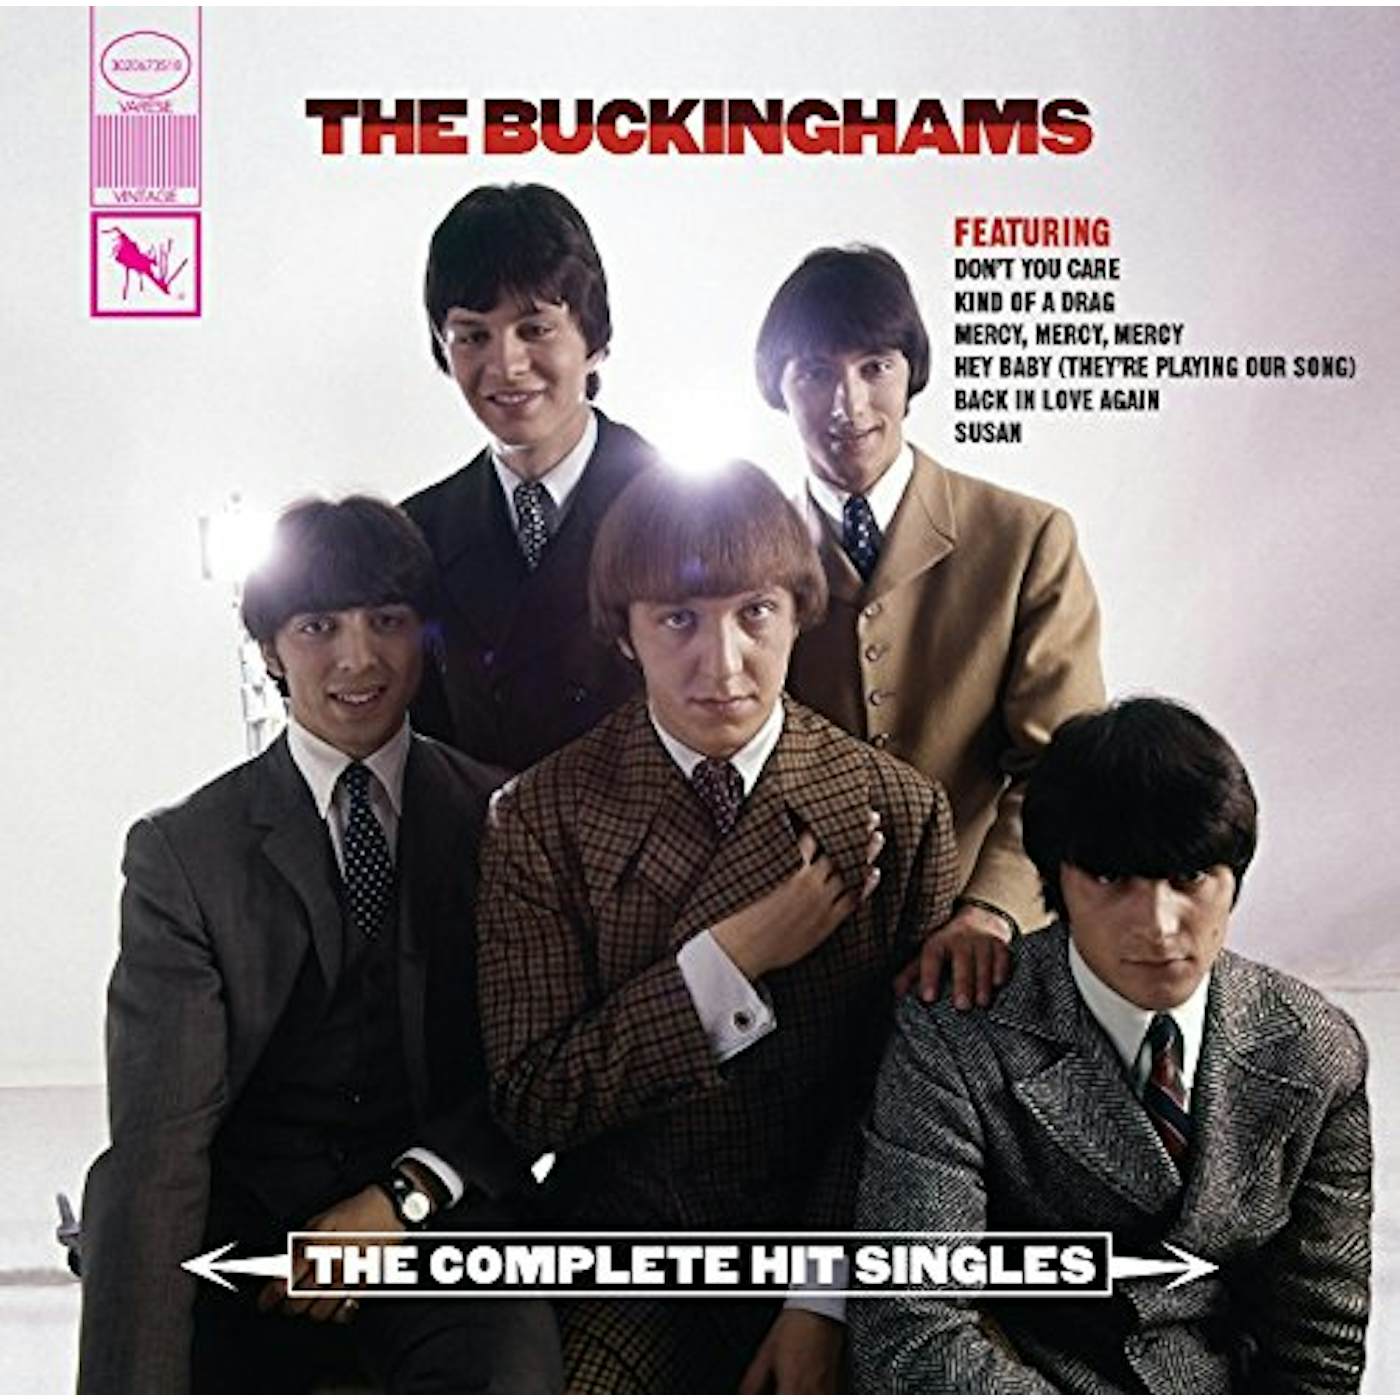 The Buckinghams: THE COMPLETE HIT SINGLES CD